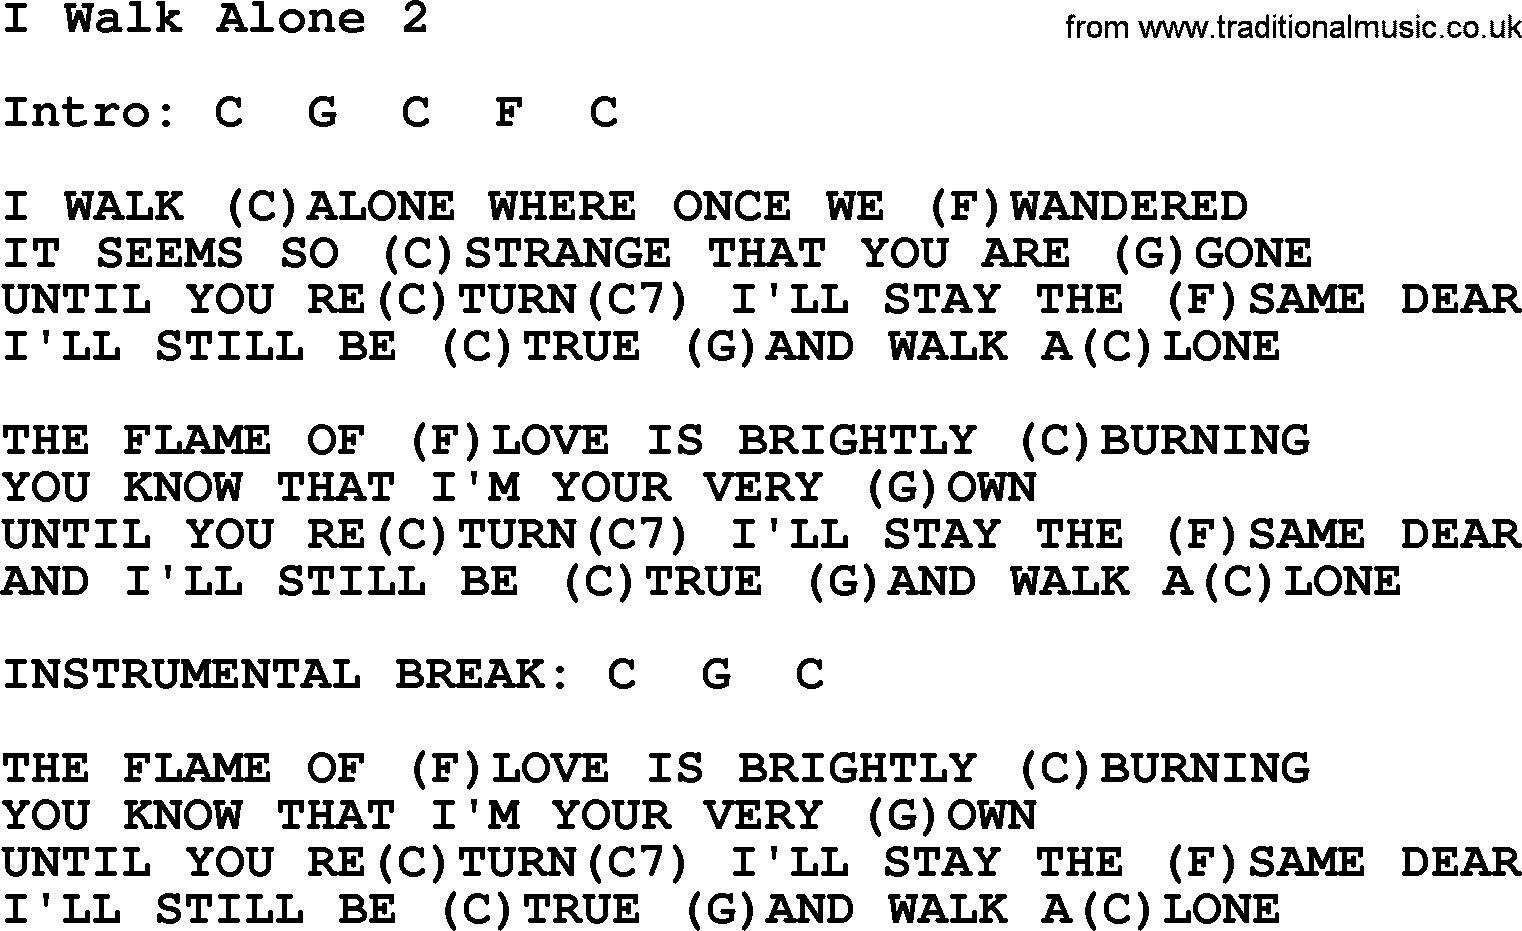 Marty Robbins song: I Walk Alone 2, lyrics and chords